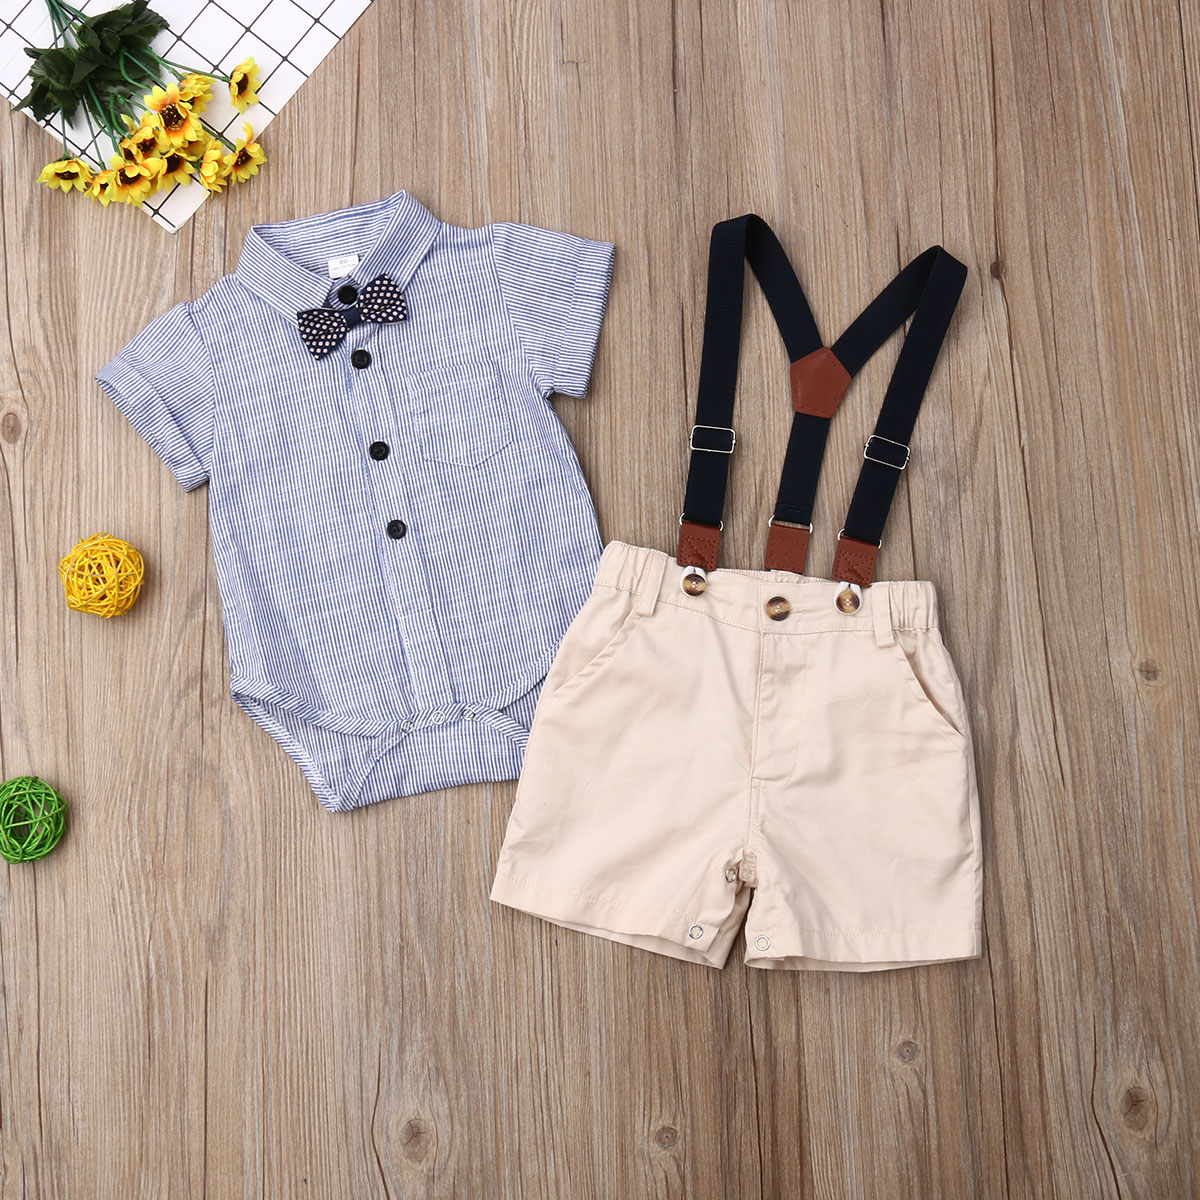 2020 Summer Clothes New 2PCS Newborn Baby Boy Gentleman Shirt Tops+Pants Shorts Clothes Outfits Set 0-24M